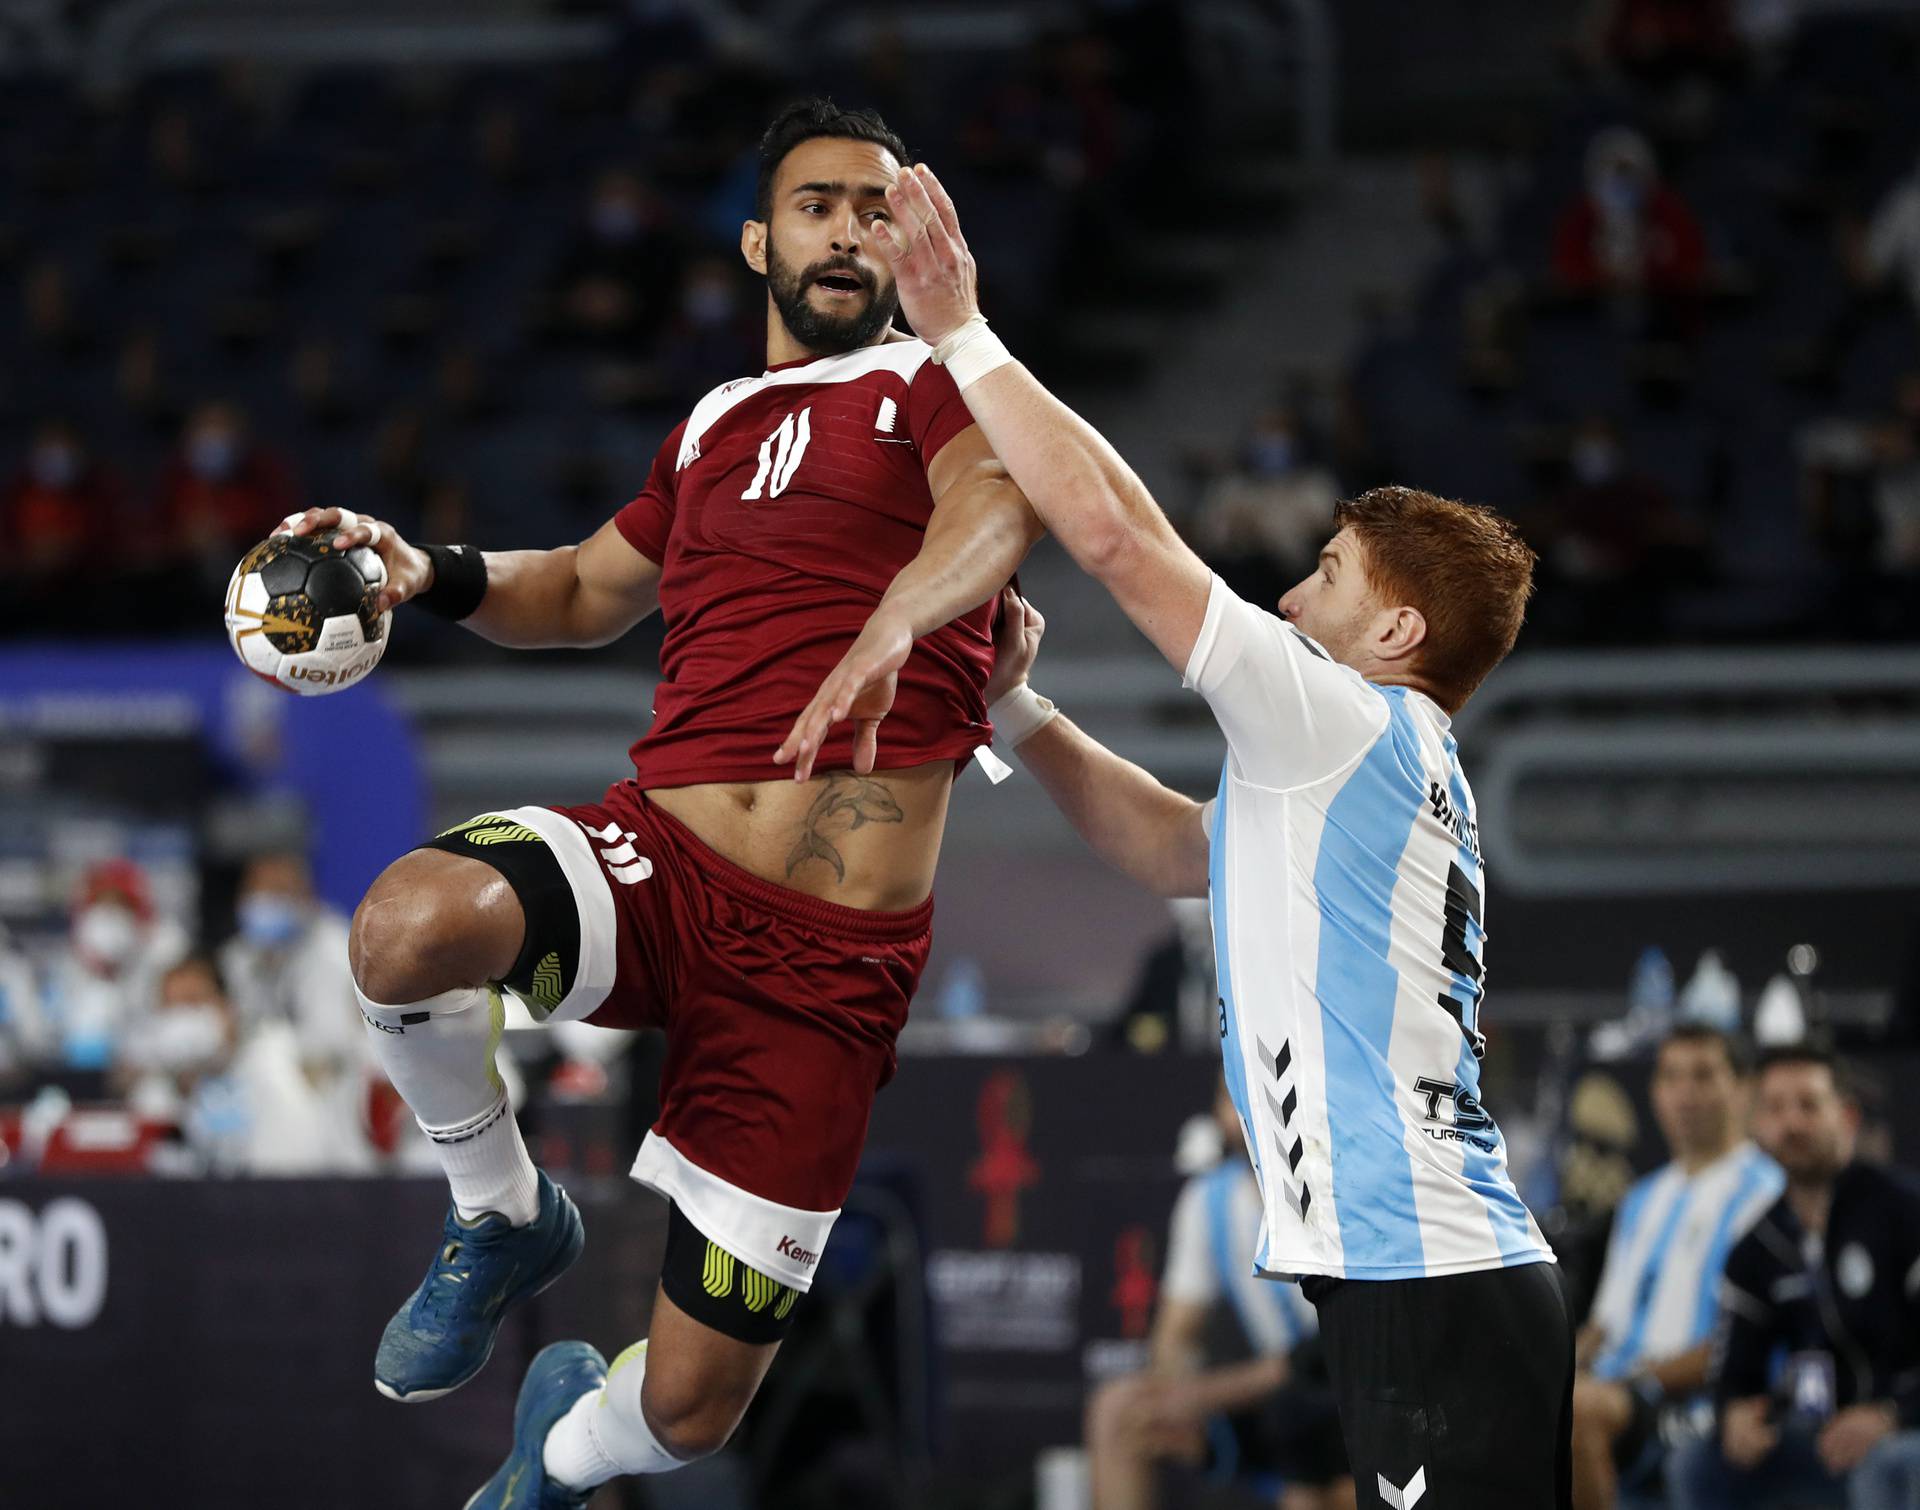 2021 IHF Handball World Championship - Main Round Group 2 - Argentina v Qatar